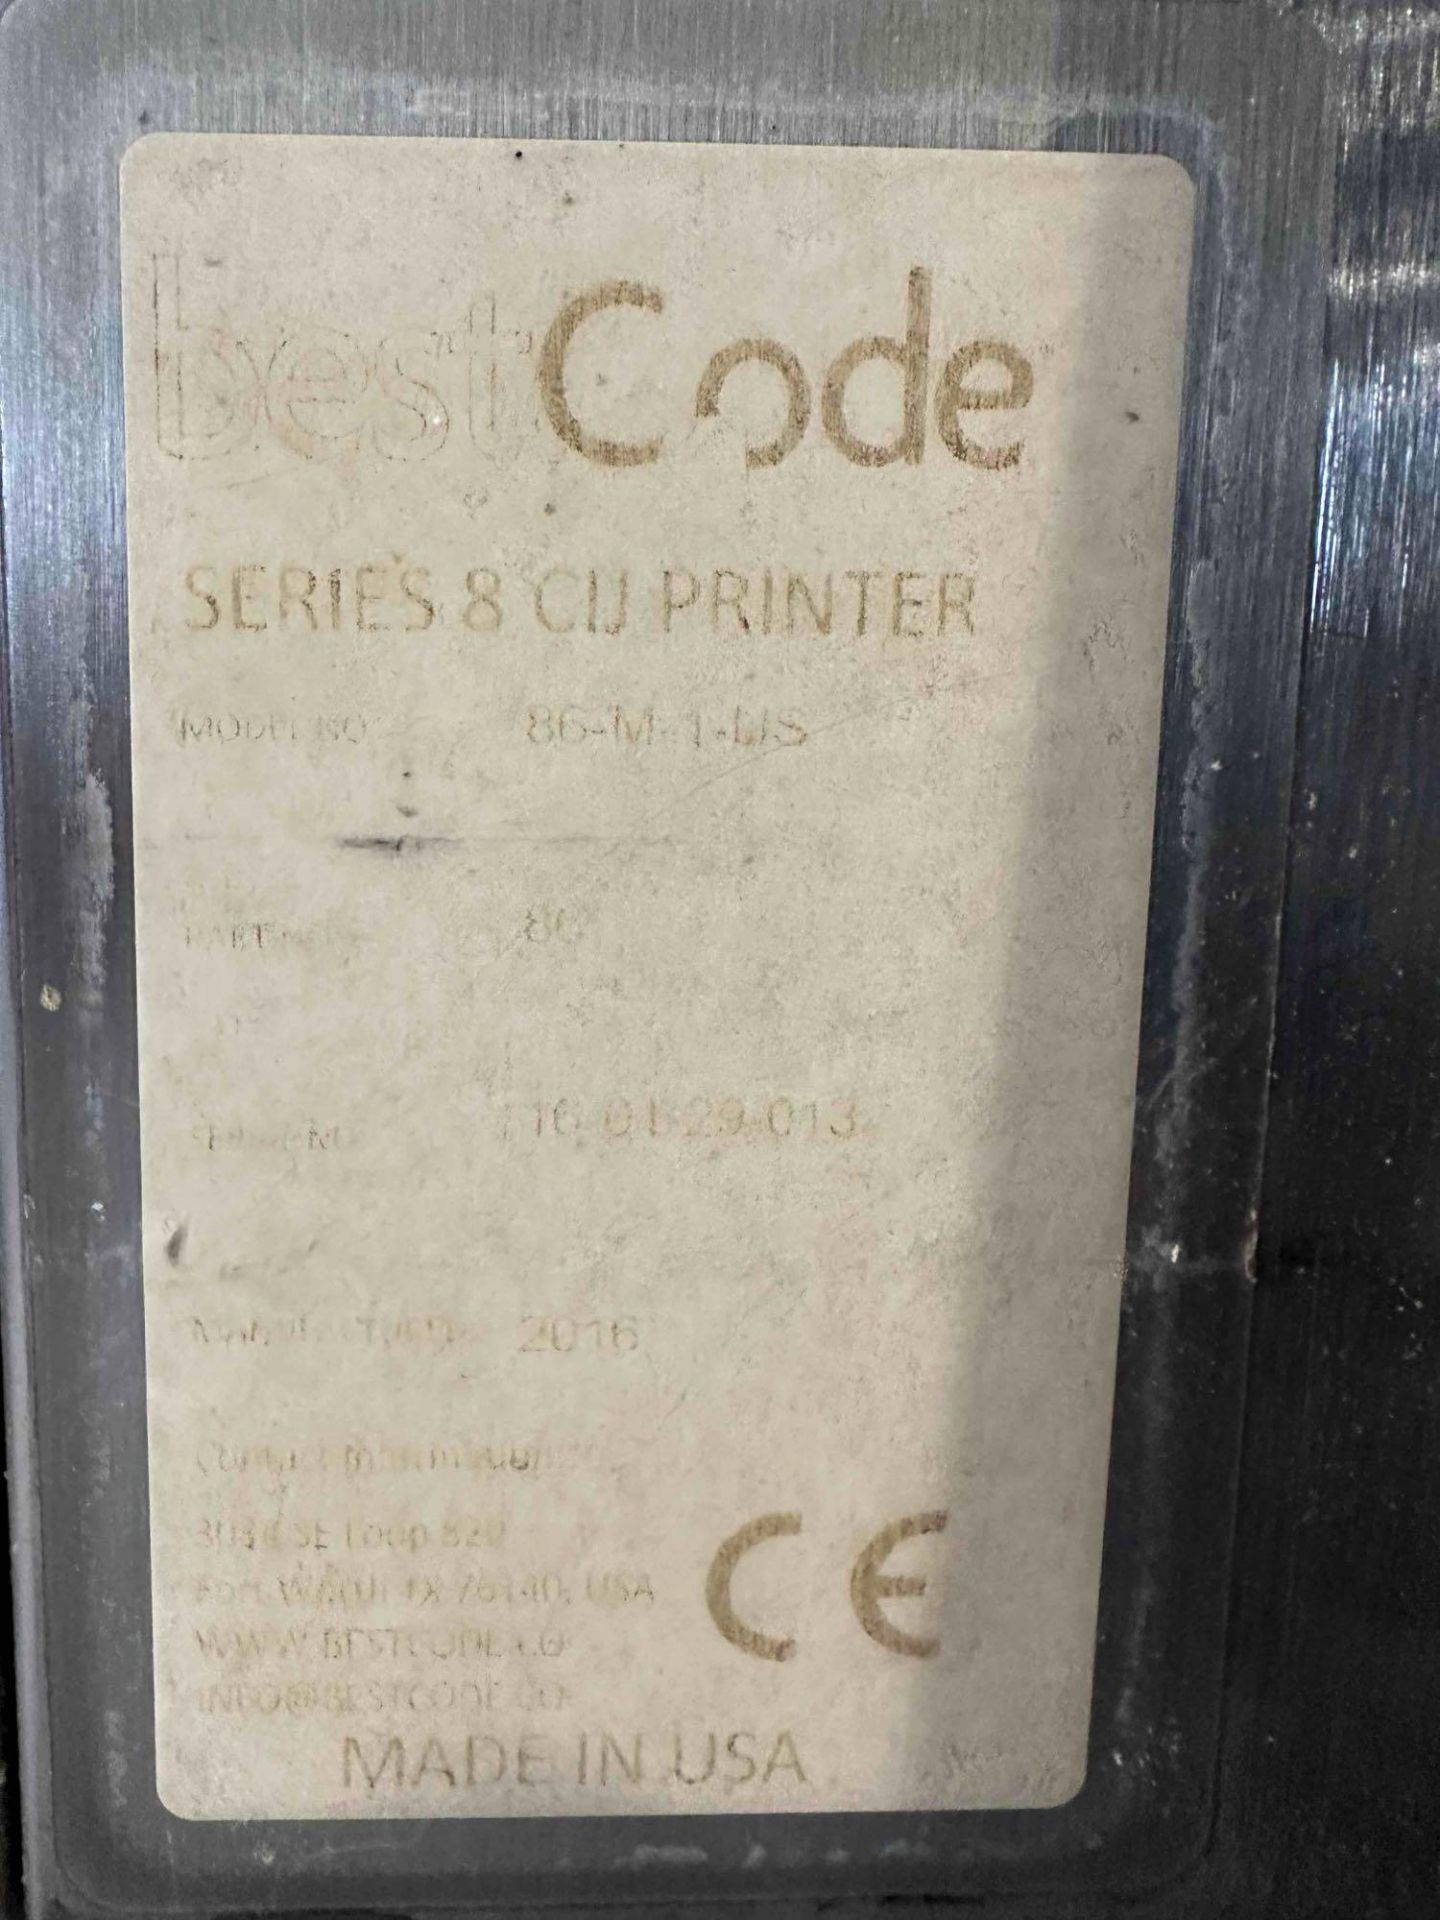 Best Code Laser Printer 86-M-1-BIS - Image 6 of 6